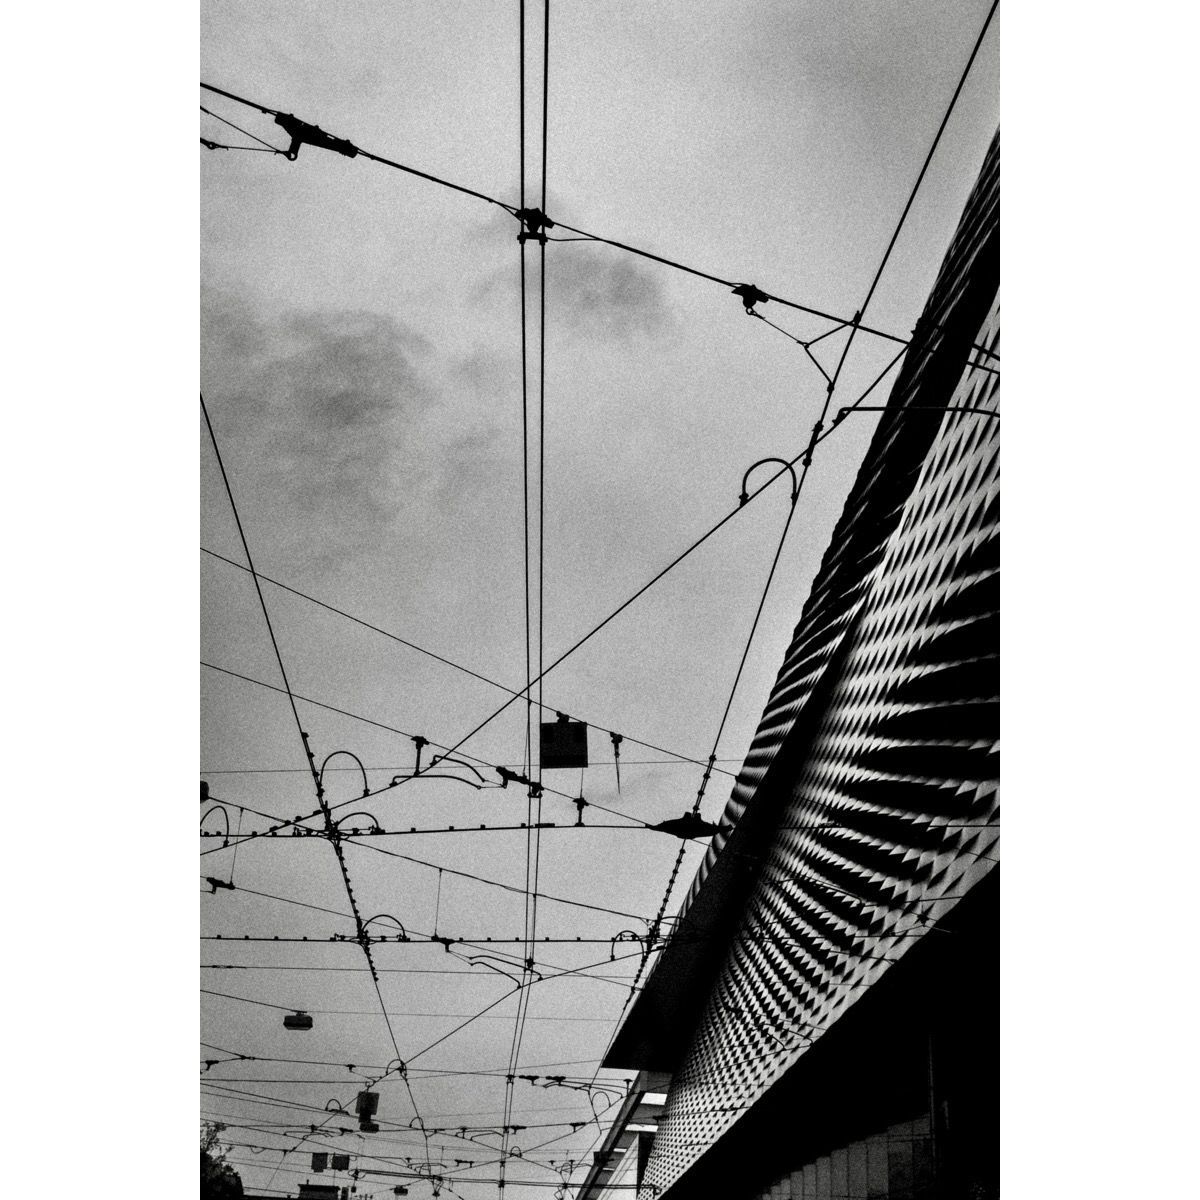 📷
ENTRELACS / INTERLACING
•
#paysageurbain #cityscape #photographe #photographer #photographie #photography #noiretblanc #blackandwhite #nb #bnw #photographyisart #poetryisnotdead #photoartistry #storytelling #art #cables #wires